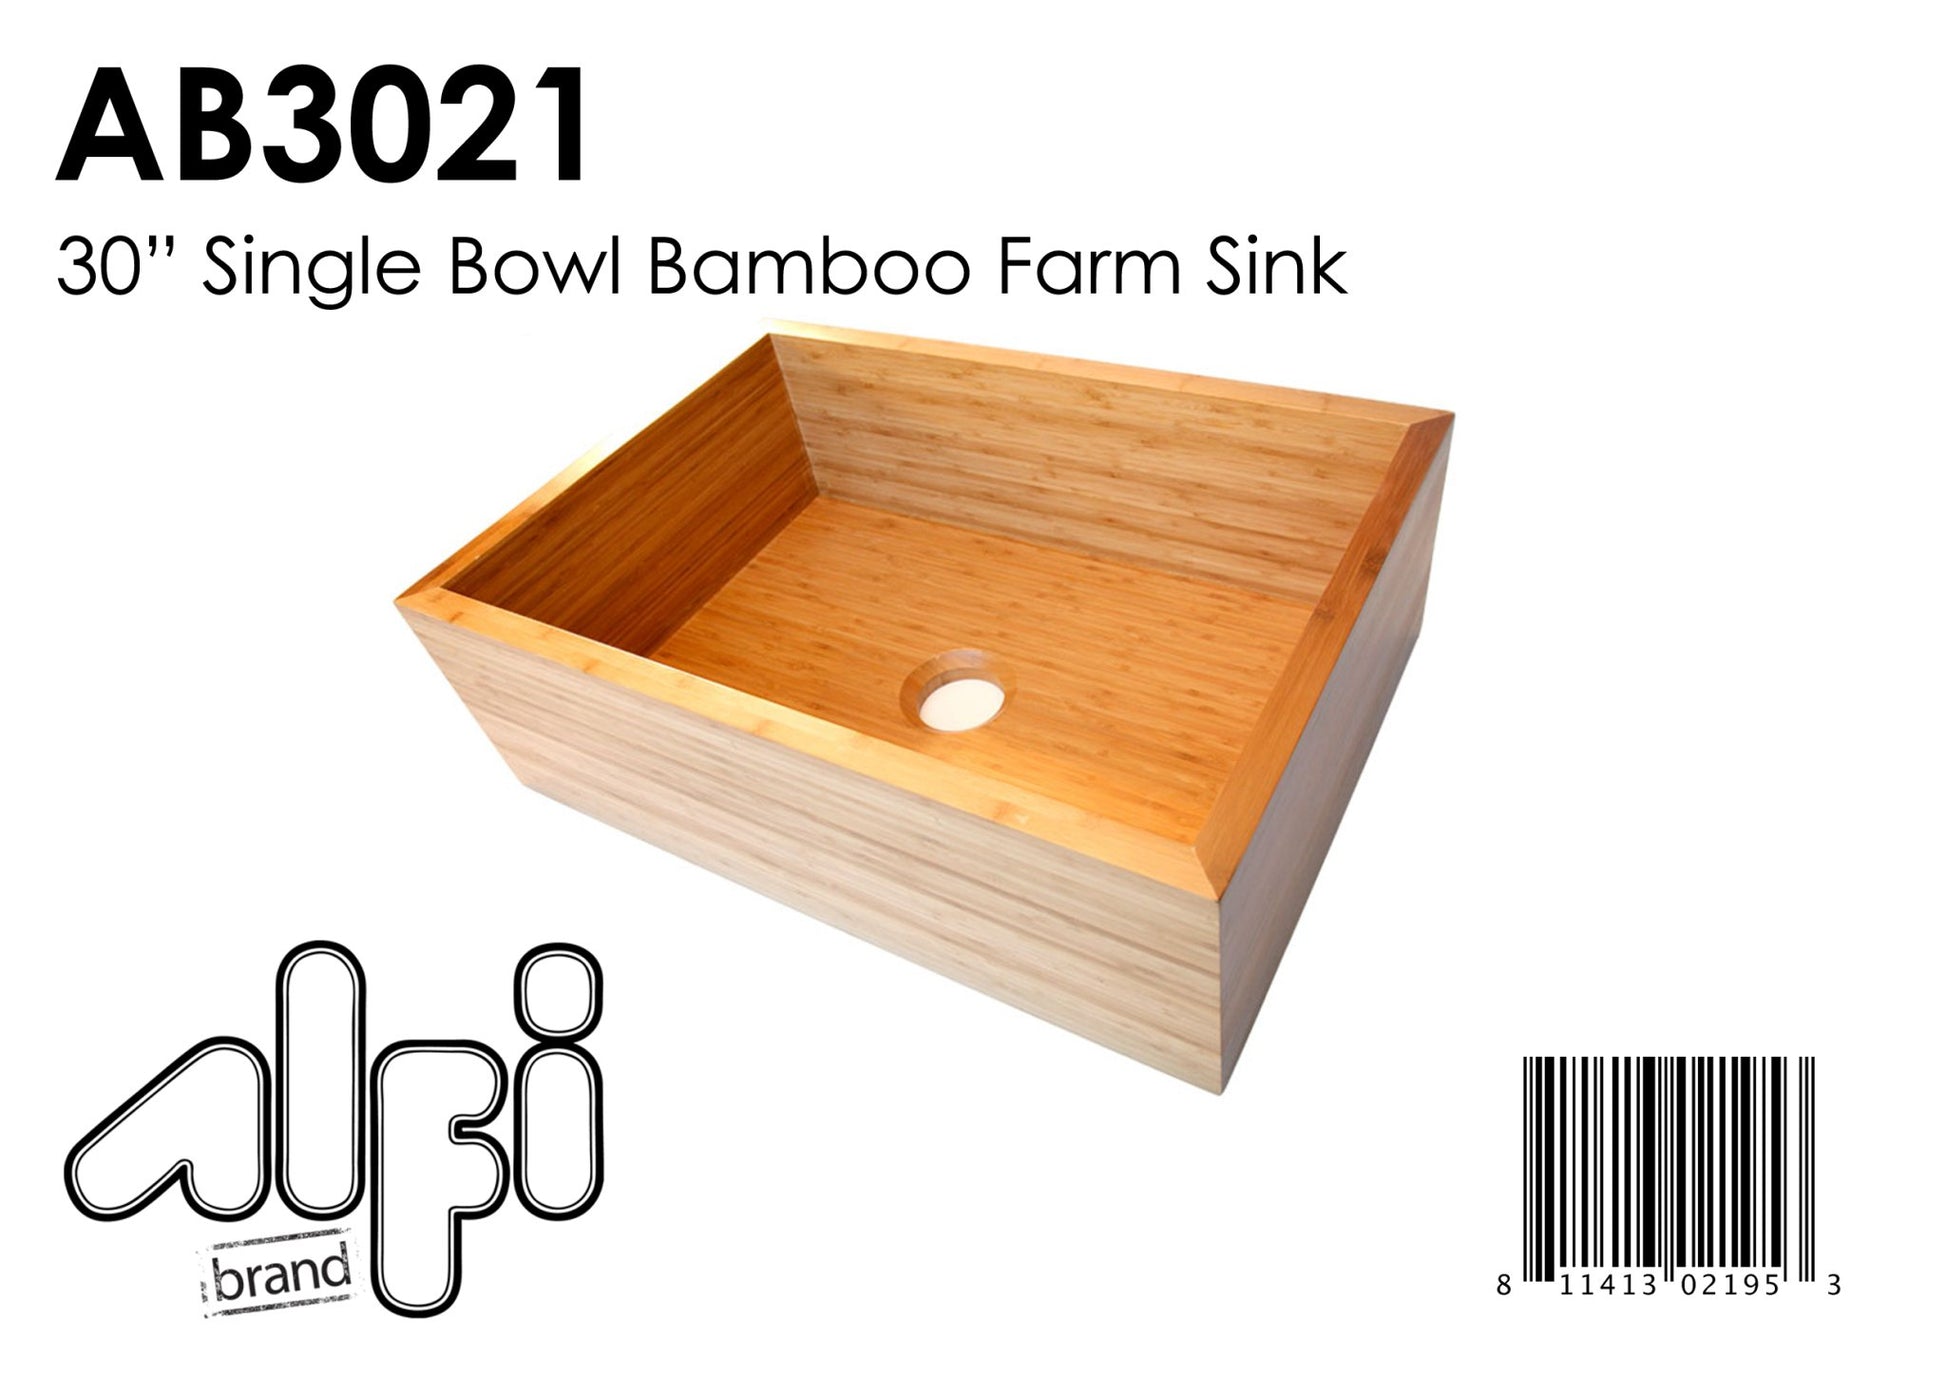 Alfi brand AB3021 30" Single Bowl Bamboo Kitchen Farm Sink